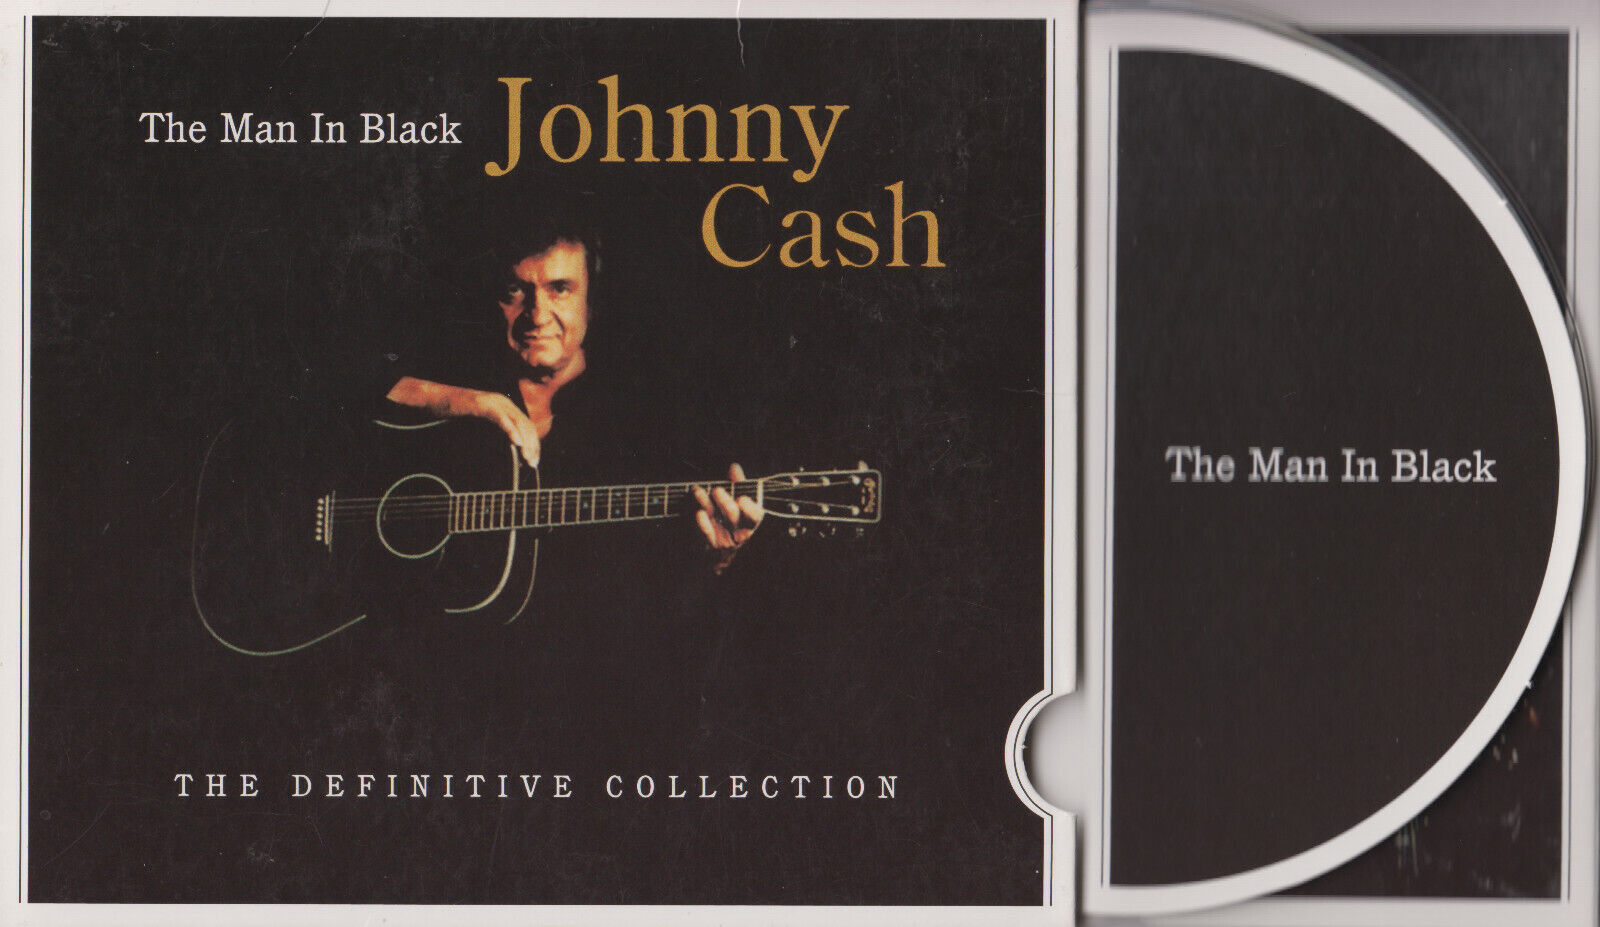 Johnny Cash - The Man In Black Slide Pack (CD, 1994 88697046542) Fully Tested